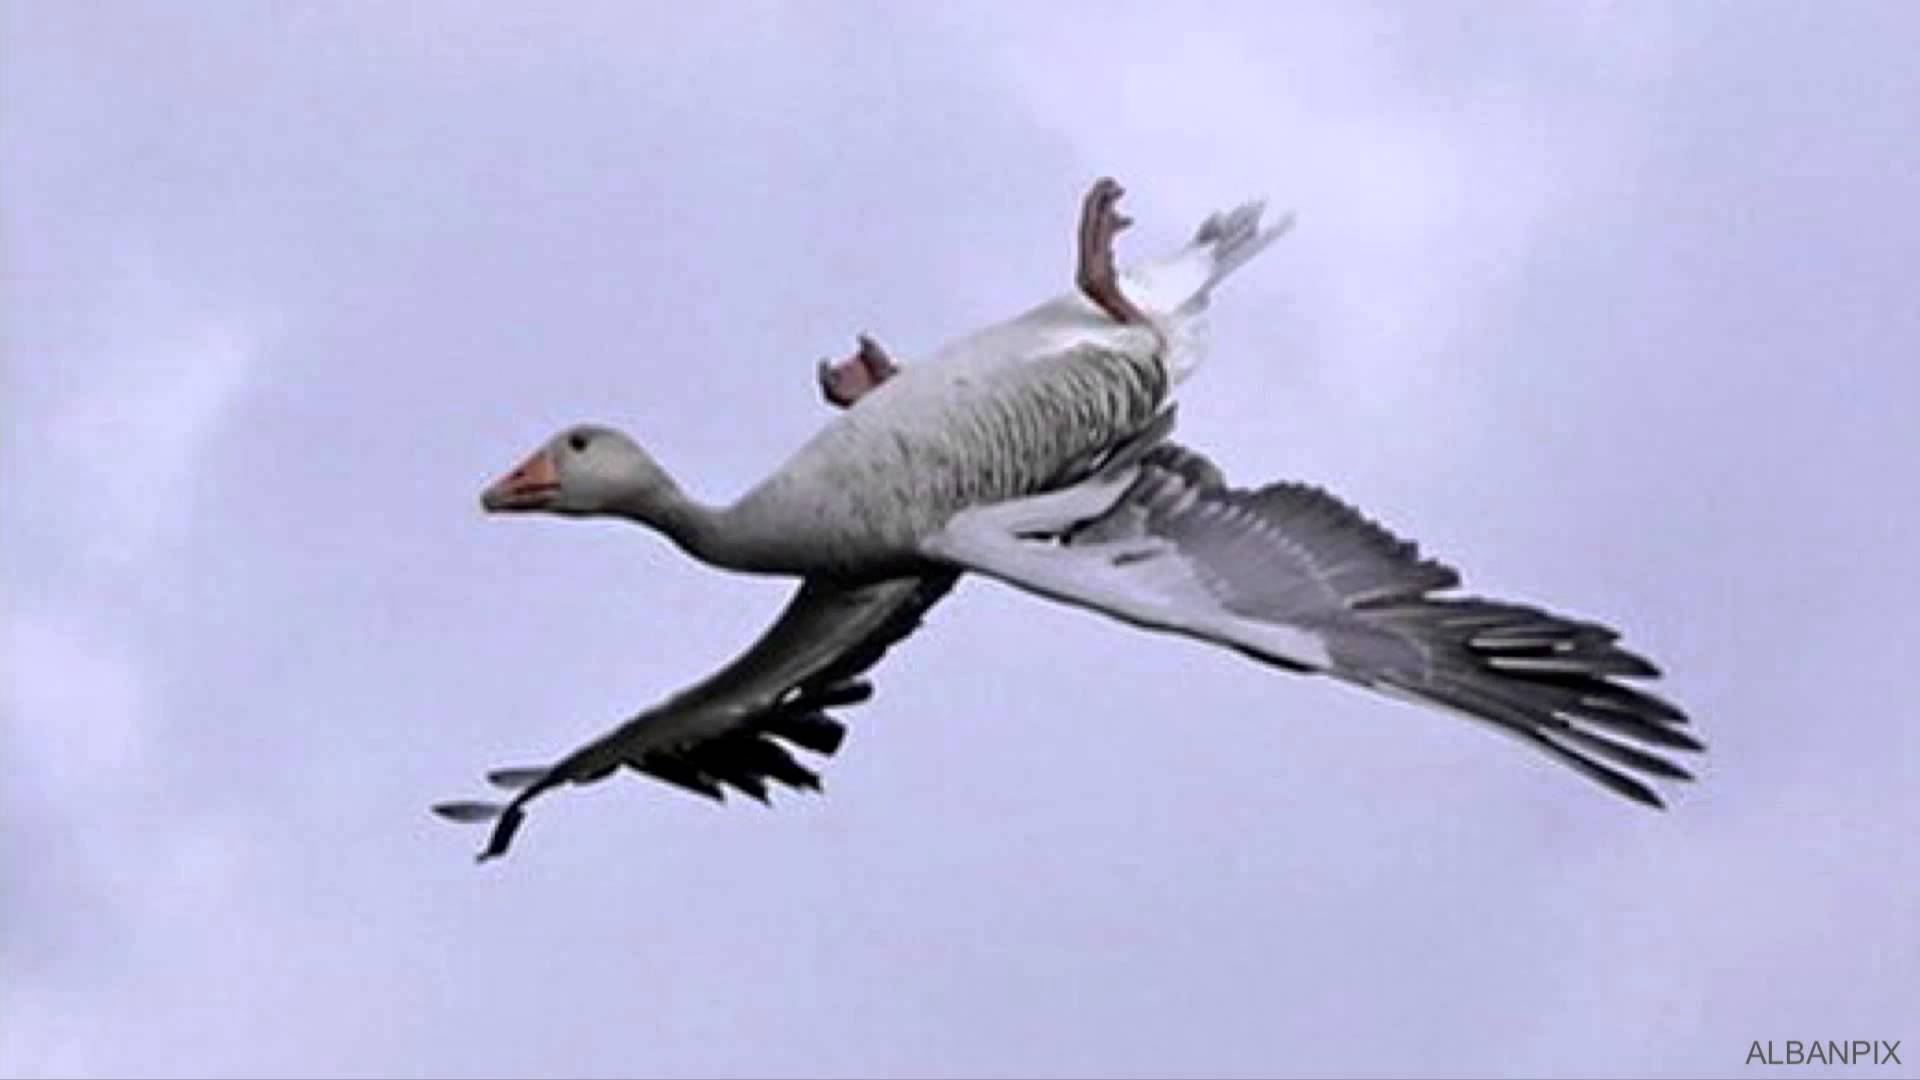 David Lentink, “The Magic of Bird Flight” - YouTube